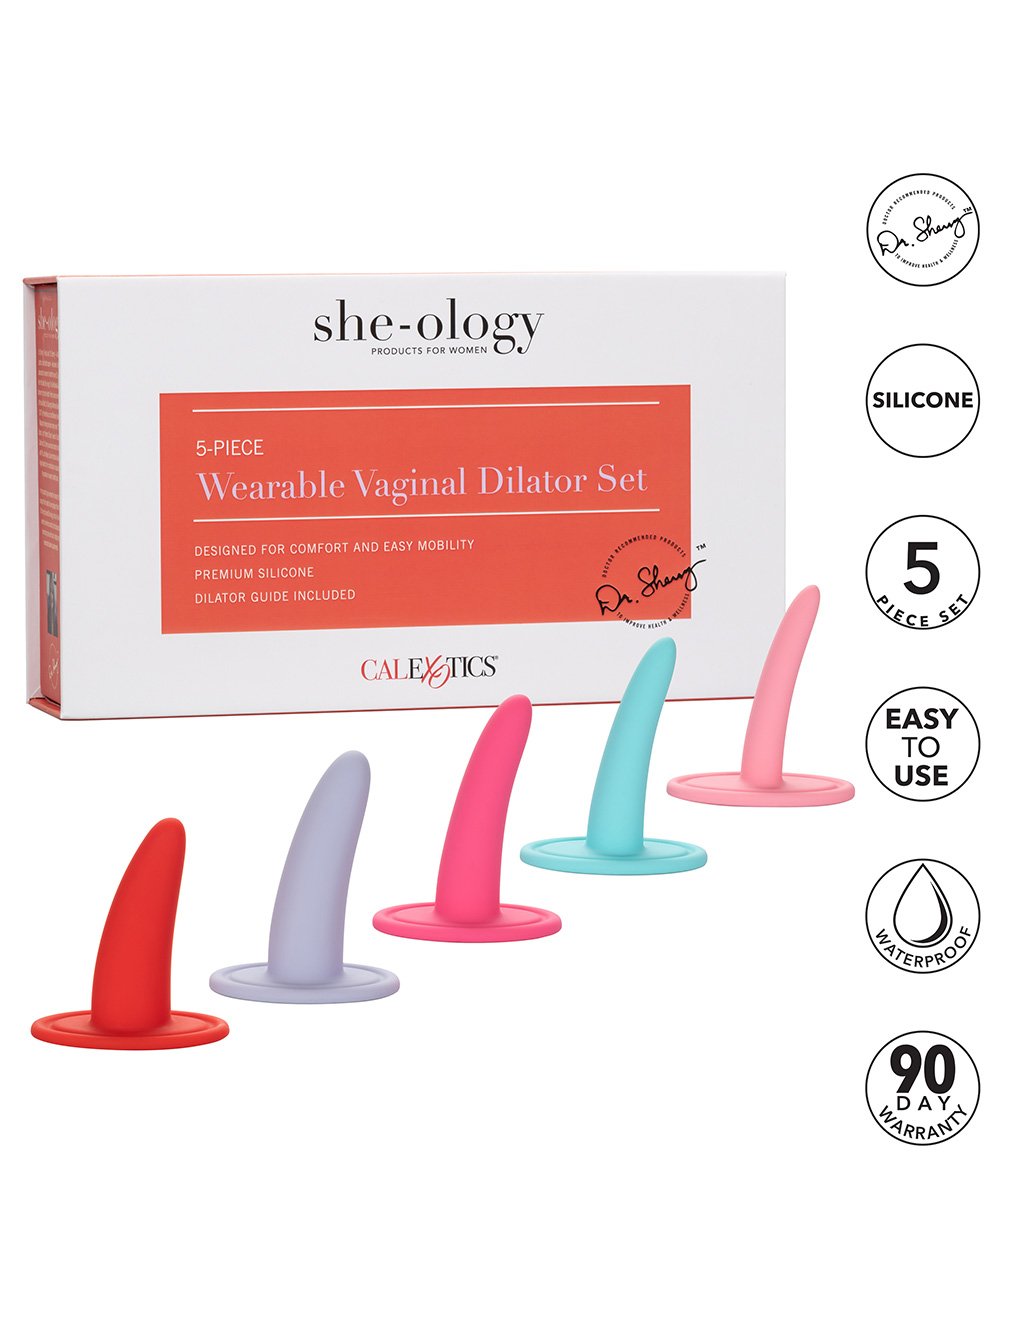 She-Ology 5 Piece Vaginal Dilator Set- Features